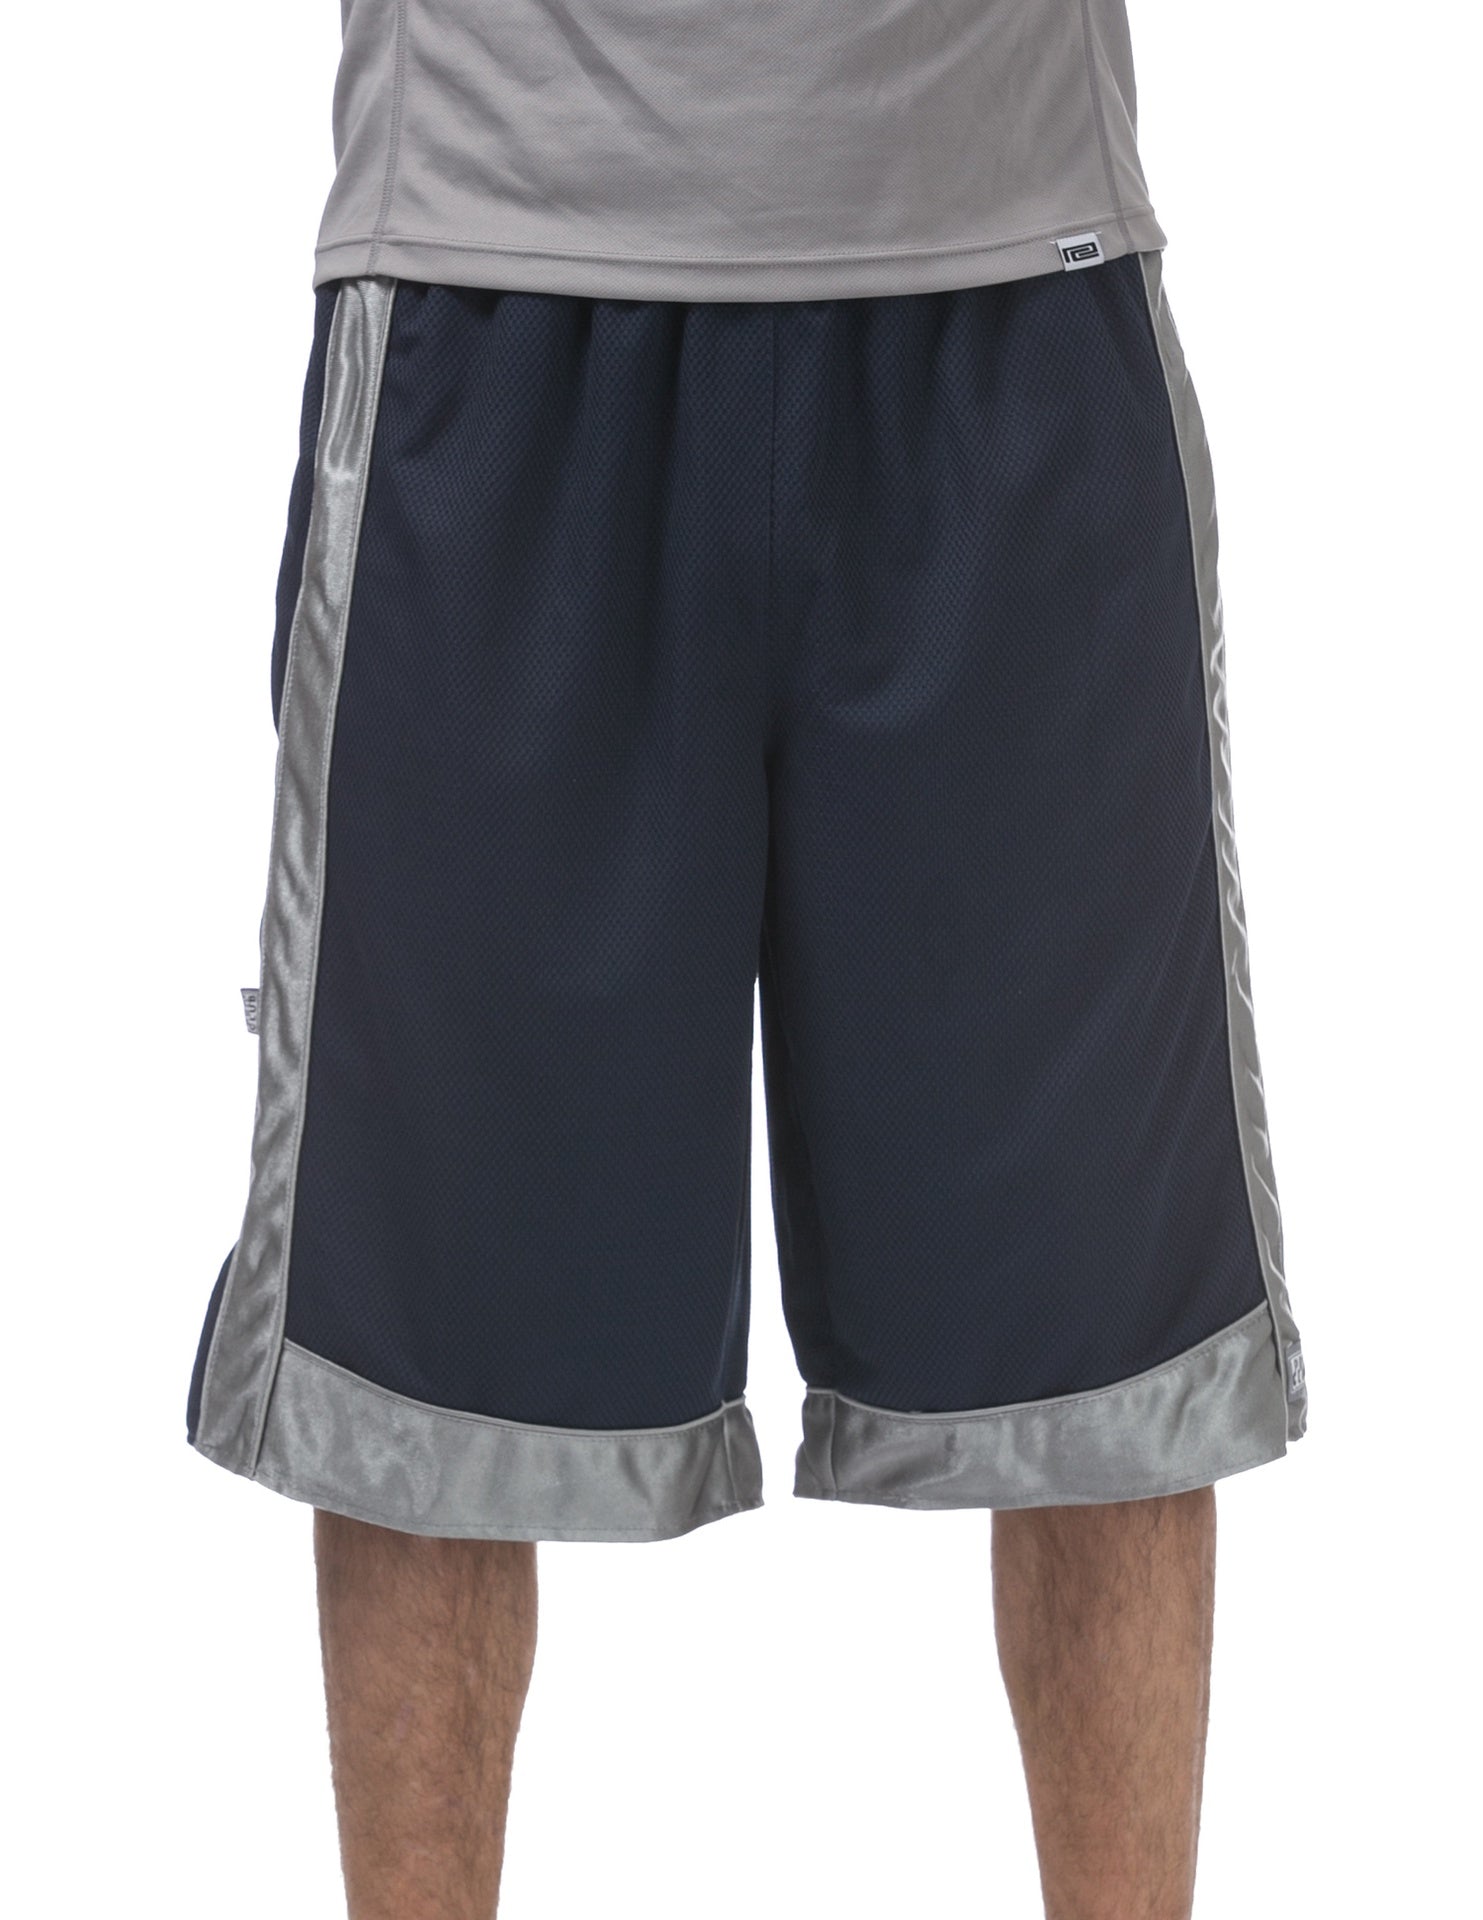 Pro Club Heavyweight Mesh Basketball Shorts - NAVY/GRAY